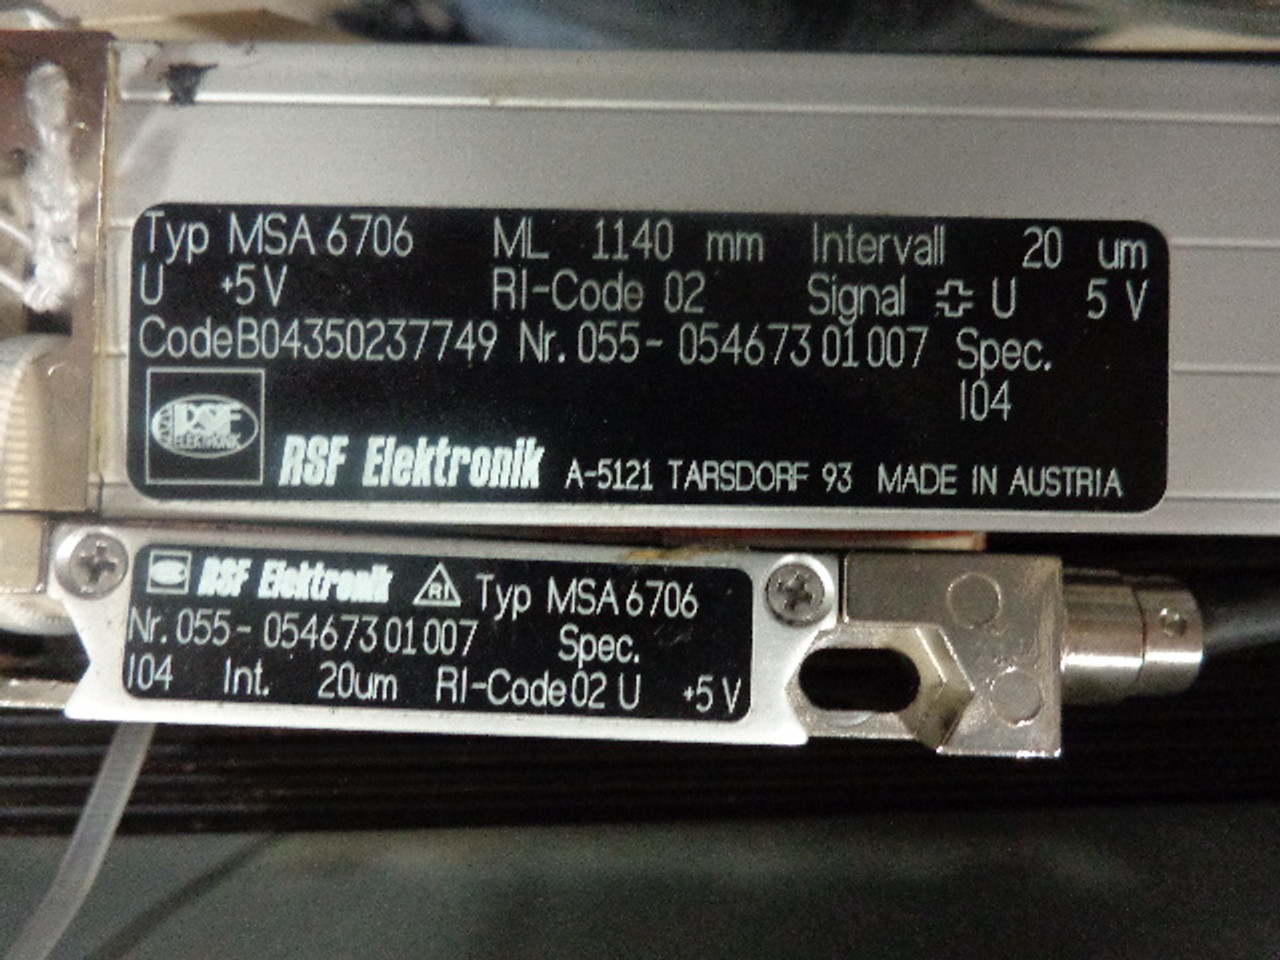 RSF Elektronik MSA6706 Linear Encoder1